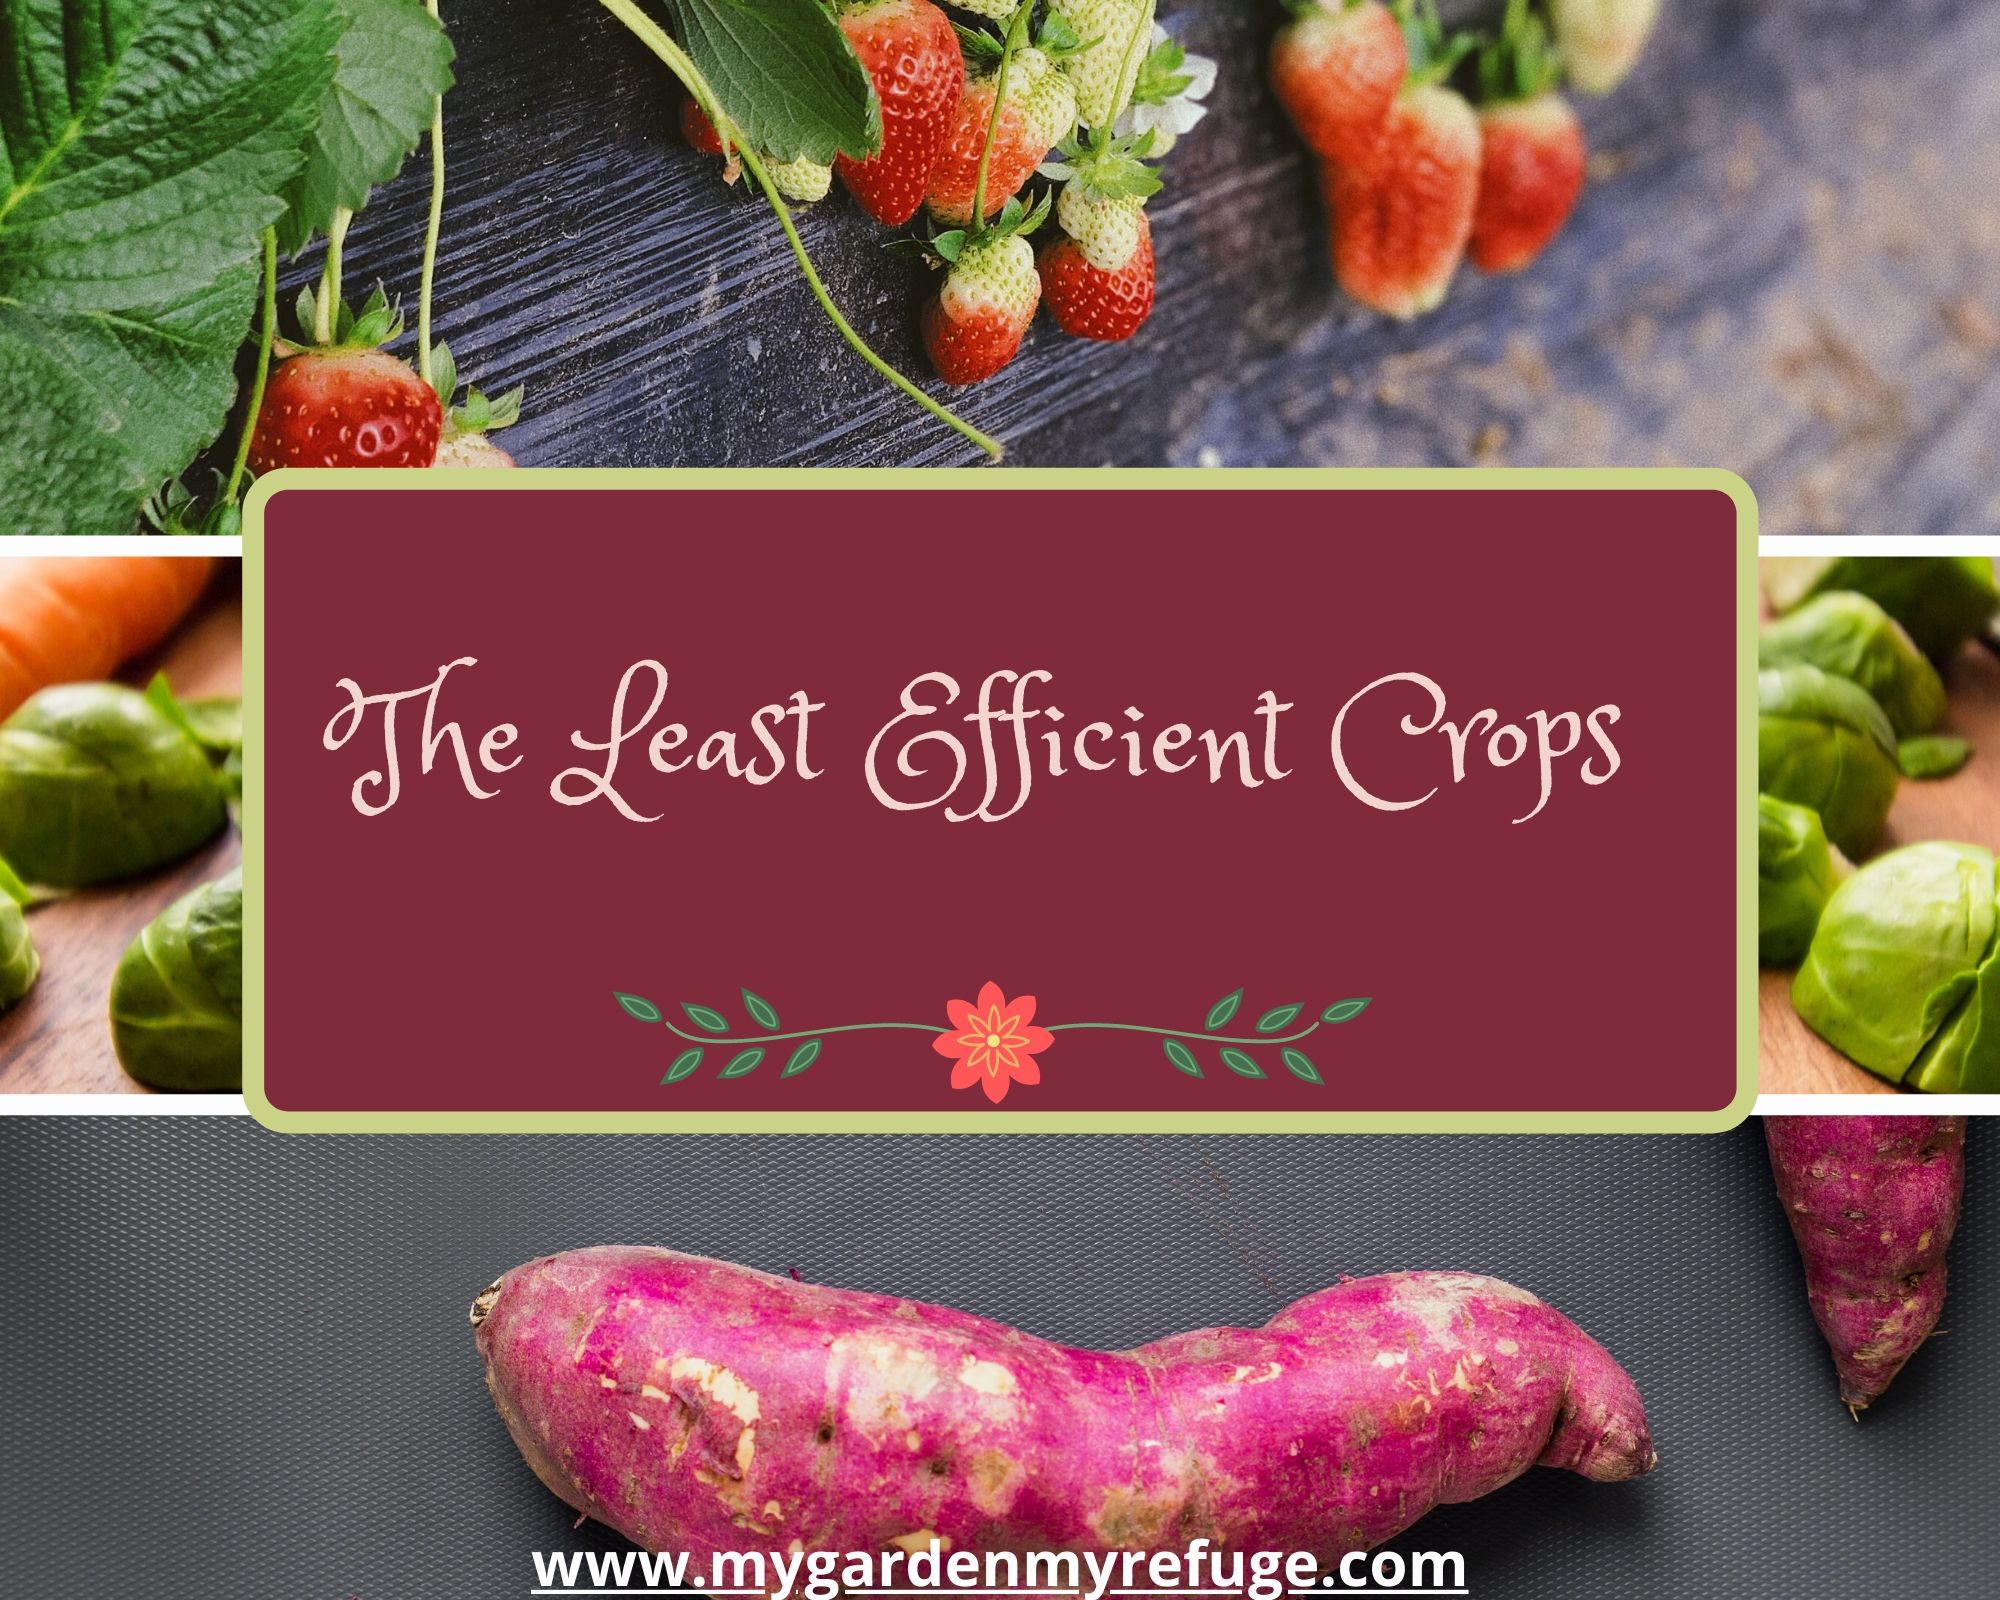 Least efficient crops